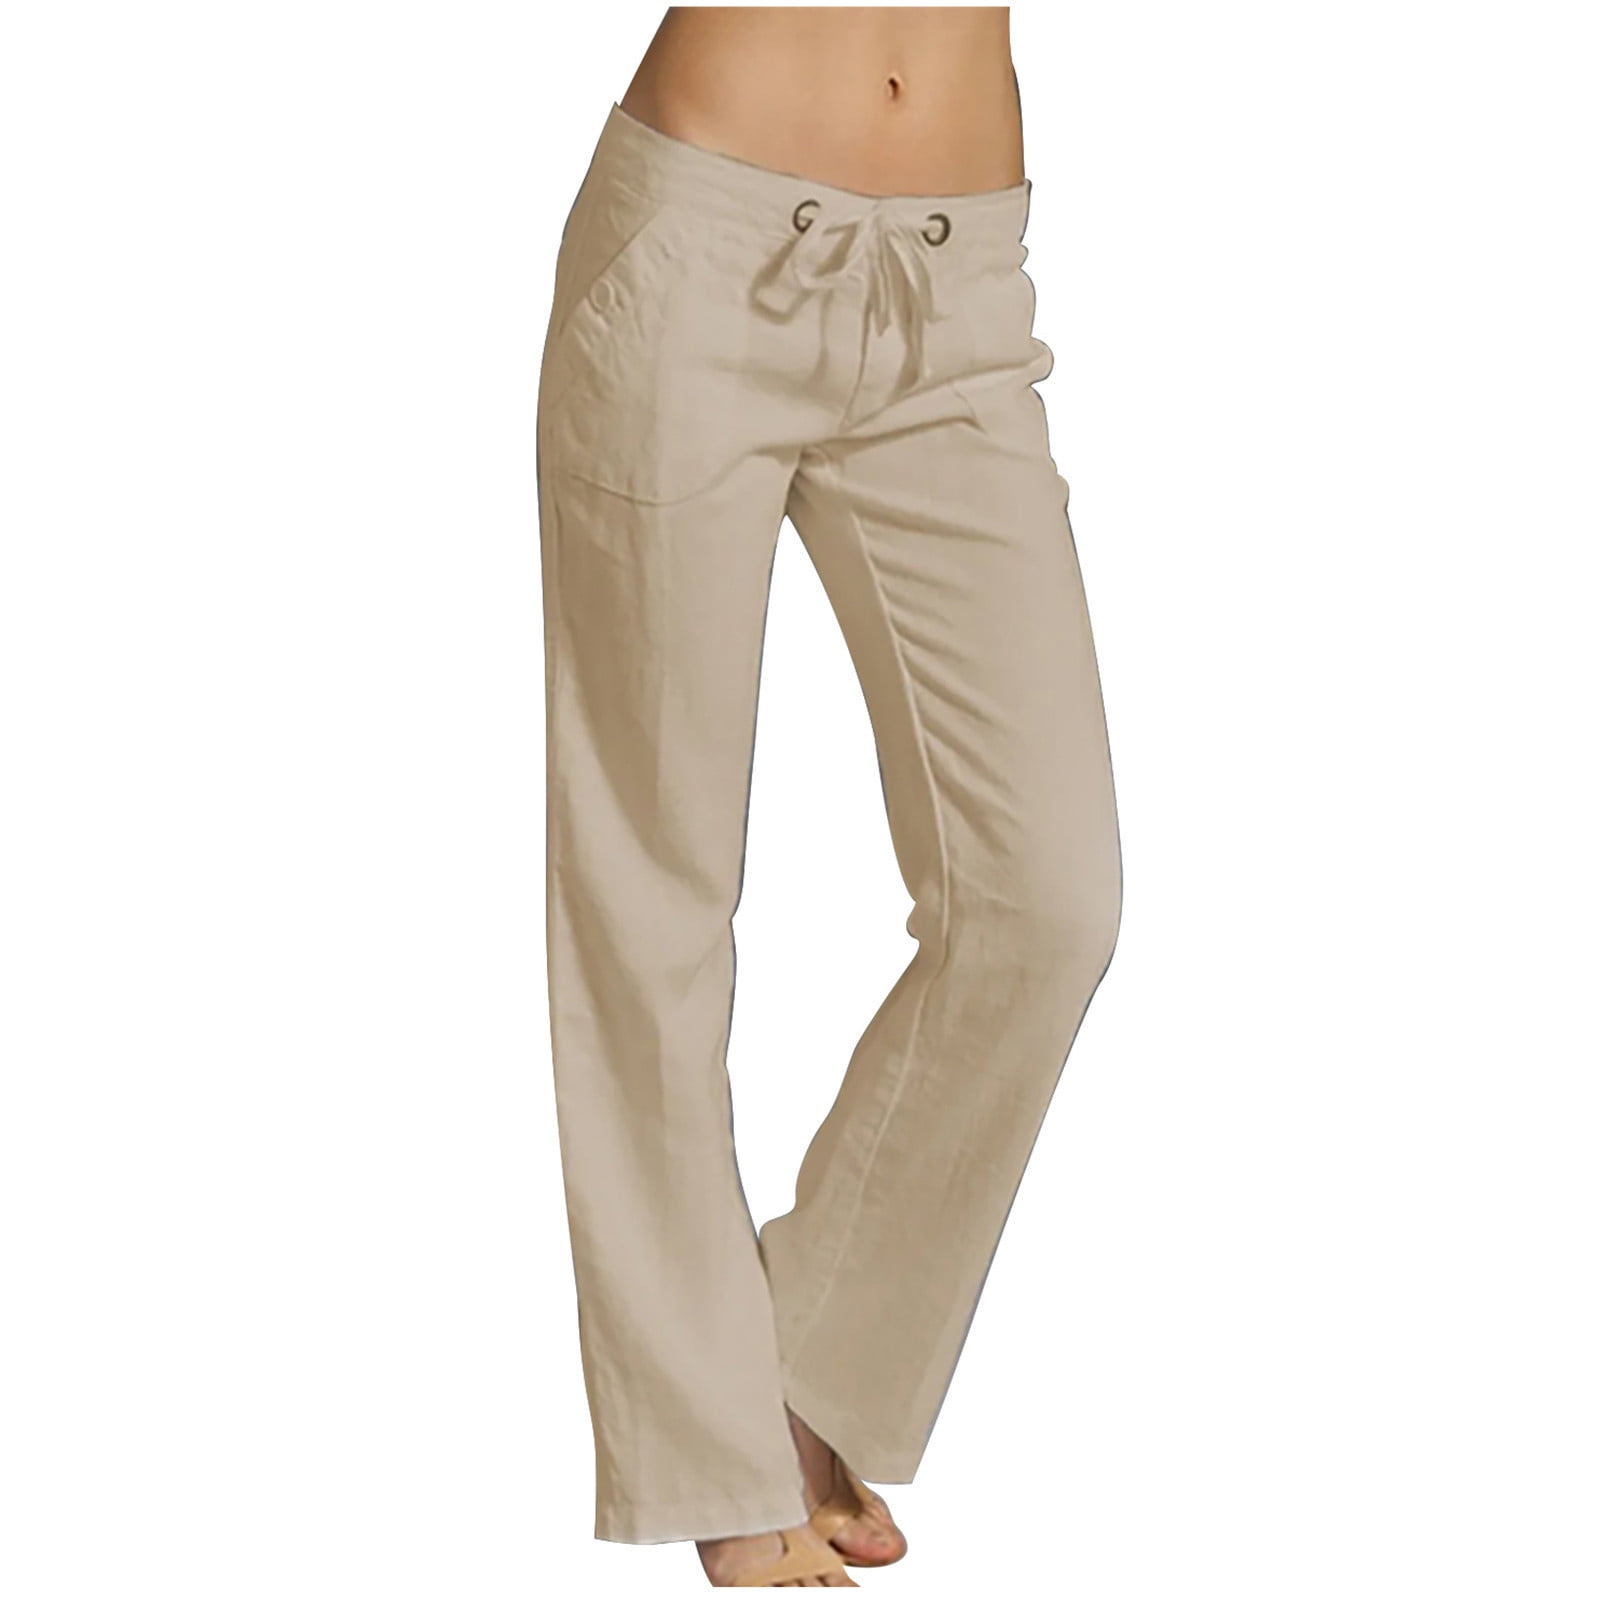 ESCBUKI Cotton Linen Pants for Women Casual Summer Solid Color Drawstring  Elastic Waist Trousers Shift Comfy Fall Pants Medium Beige Cotton Linen  Pants for Women A3